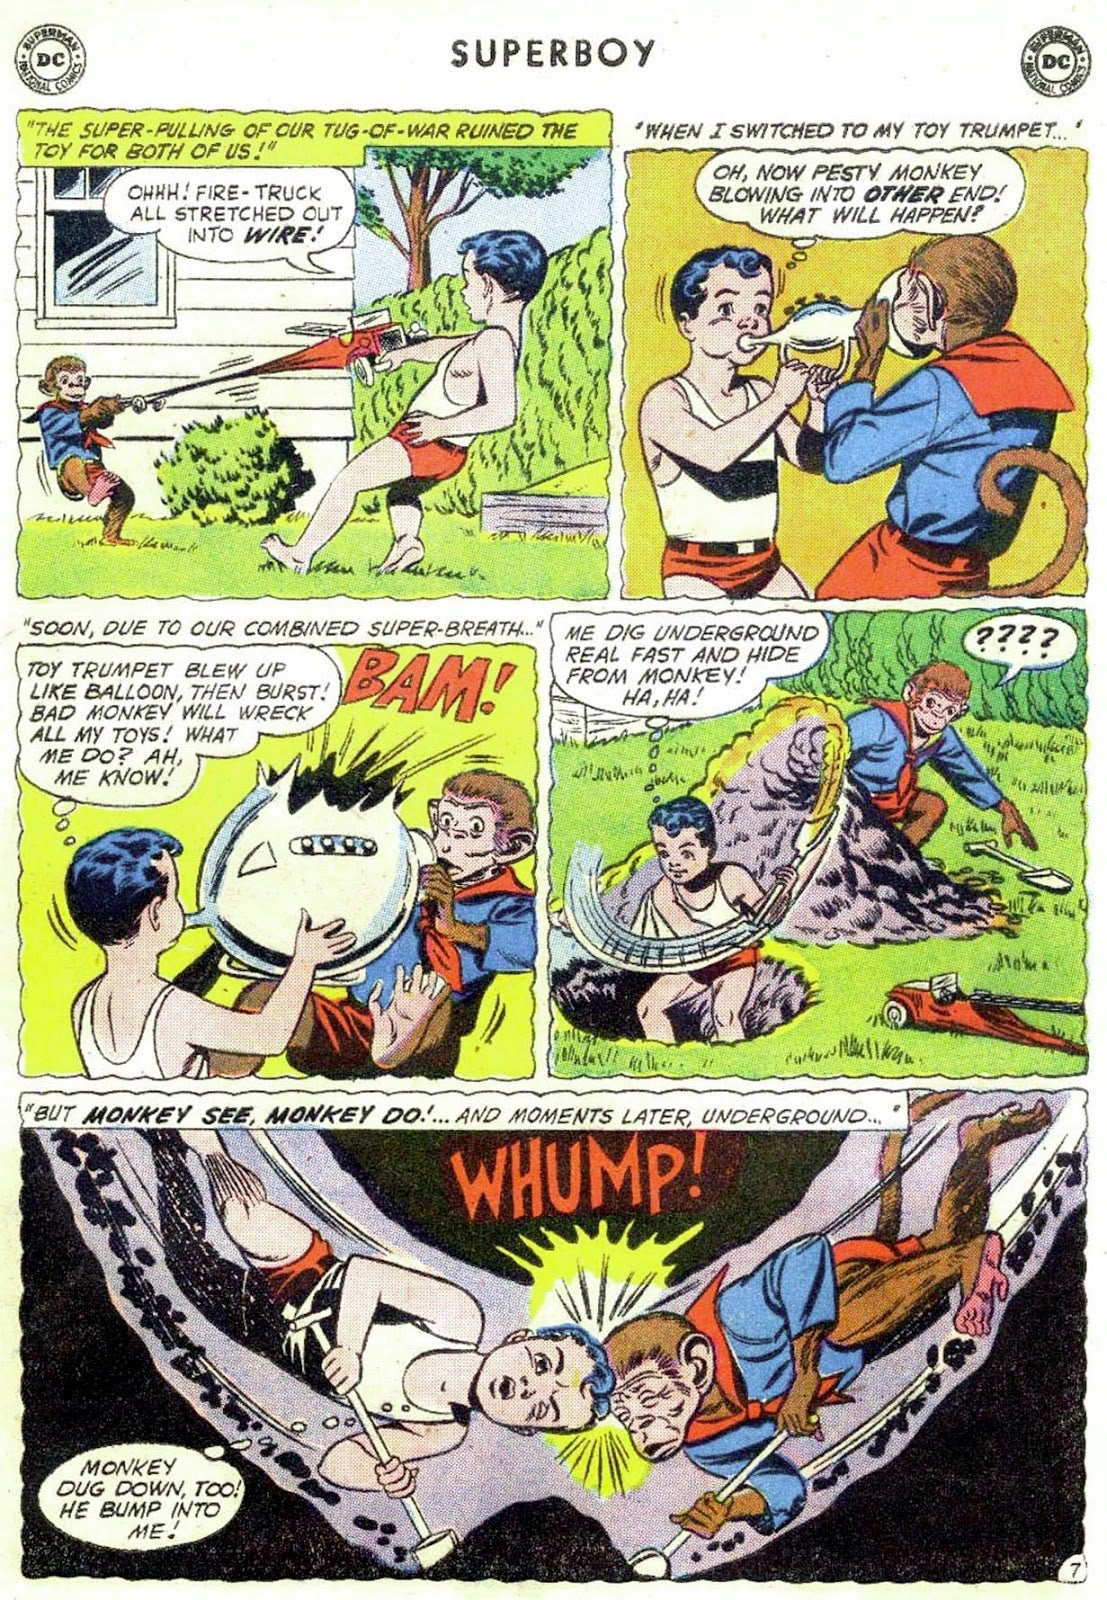 Superboy #76 (Image: DC Comics)